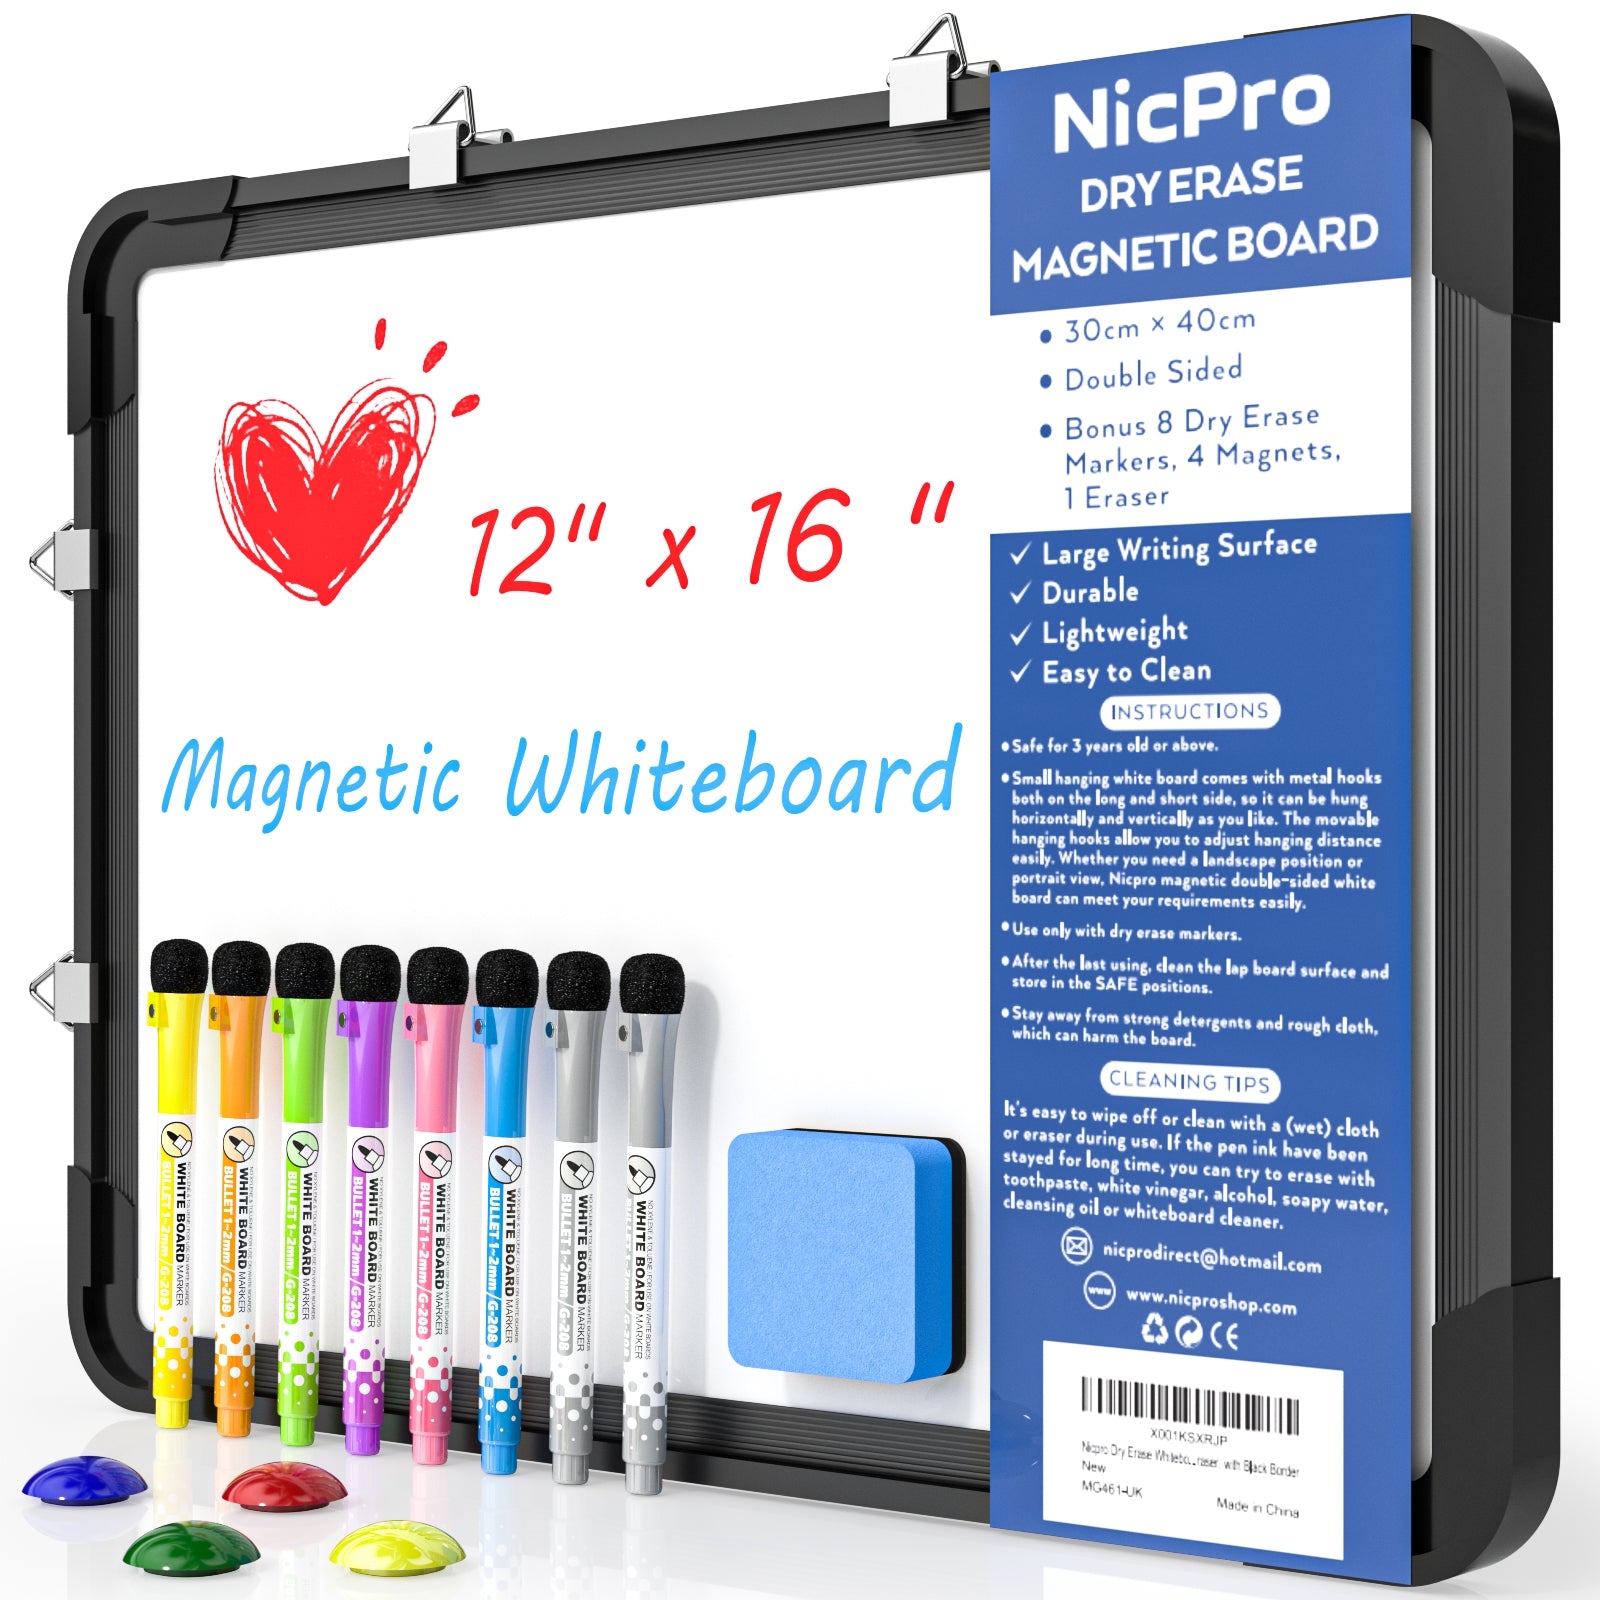 Nicpro Dry Erase Whiteboard Hanging, 12 x 16 Double Sided Large M